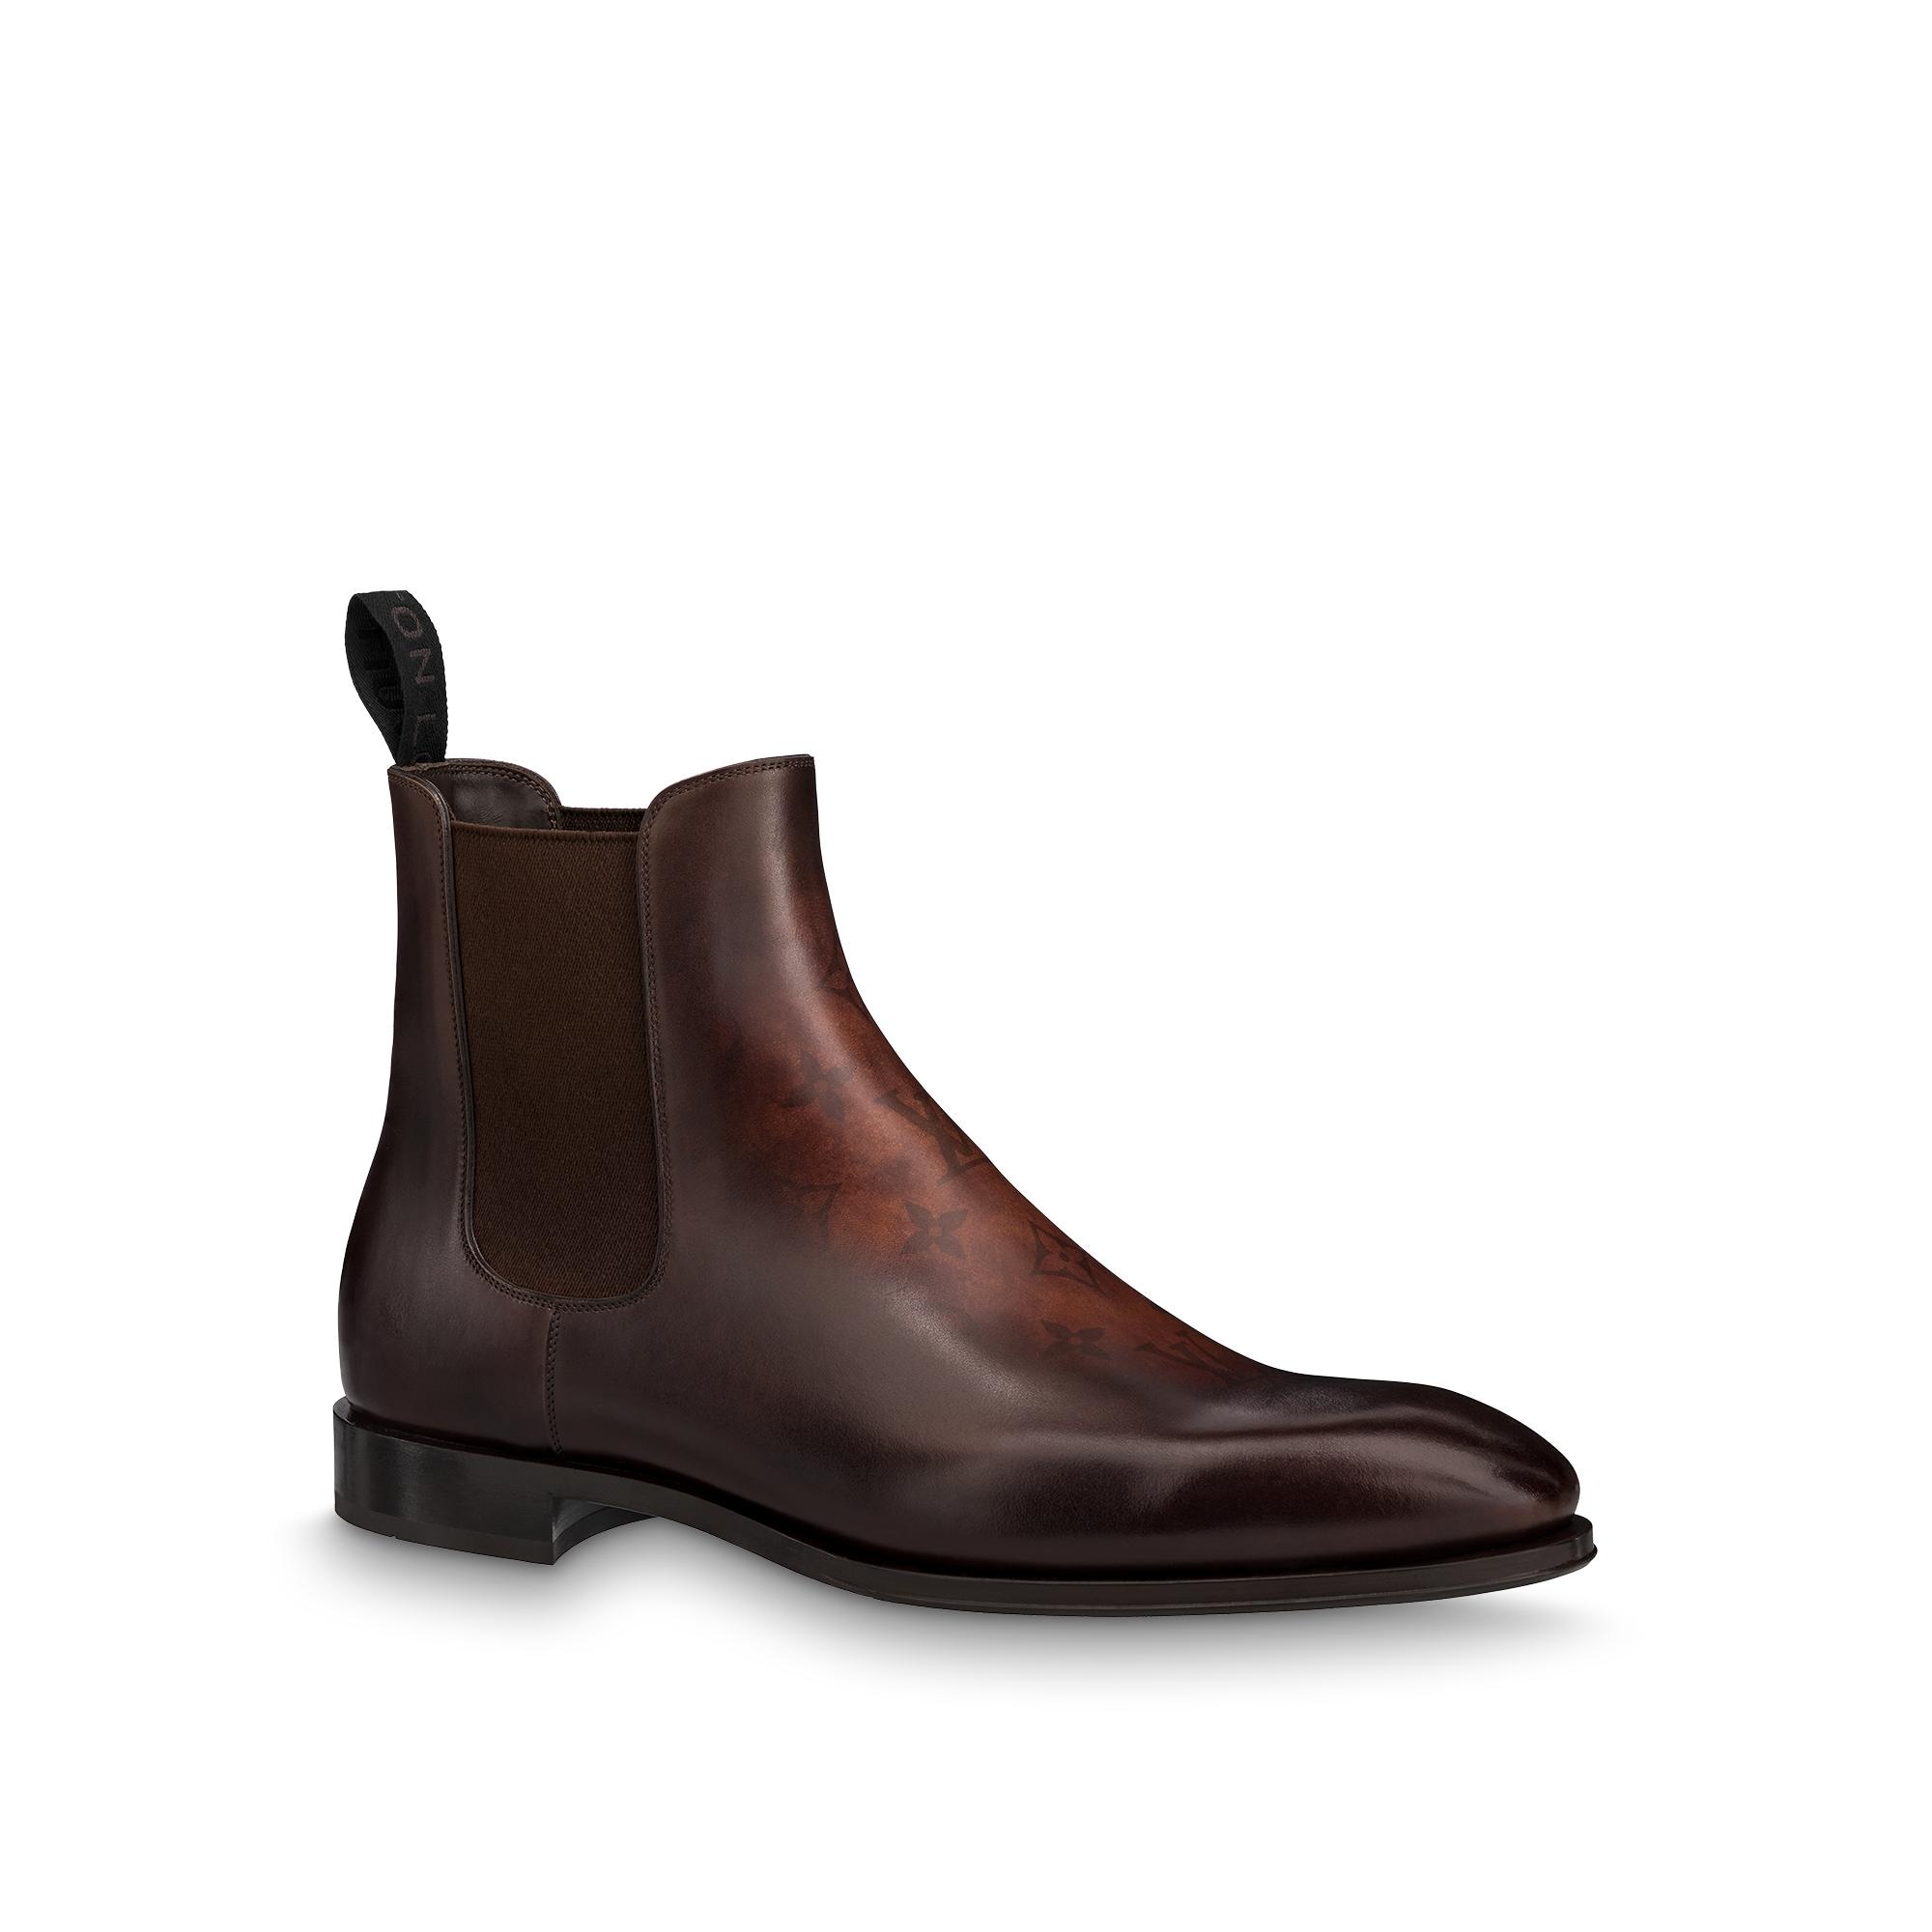 Bota Louis Vuitton original Chelsea boot marrom masculina